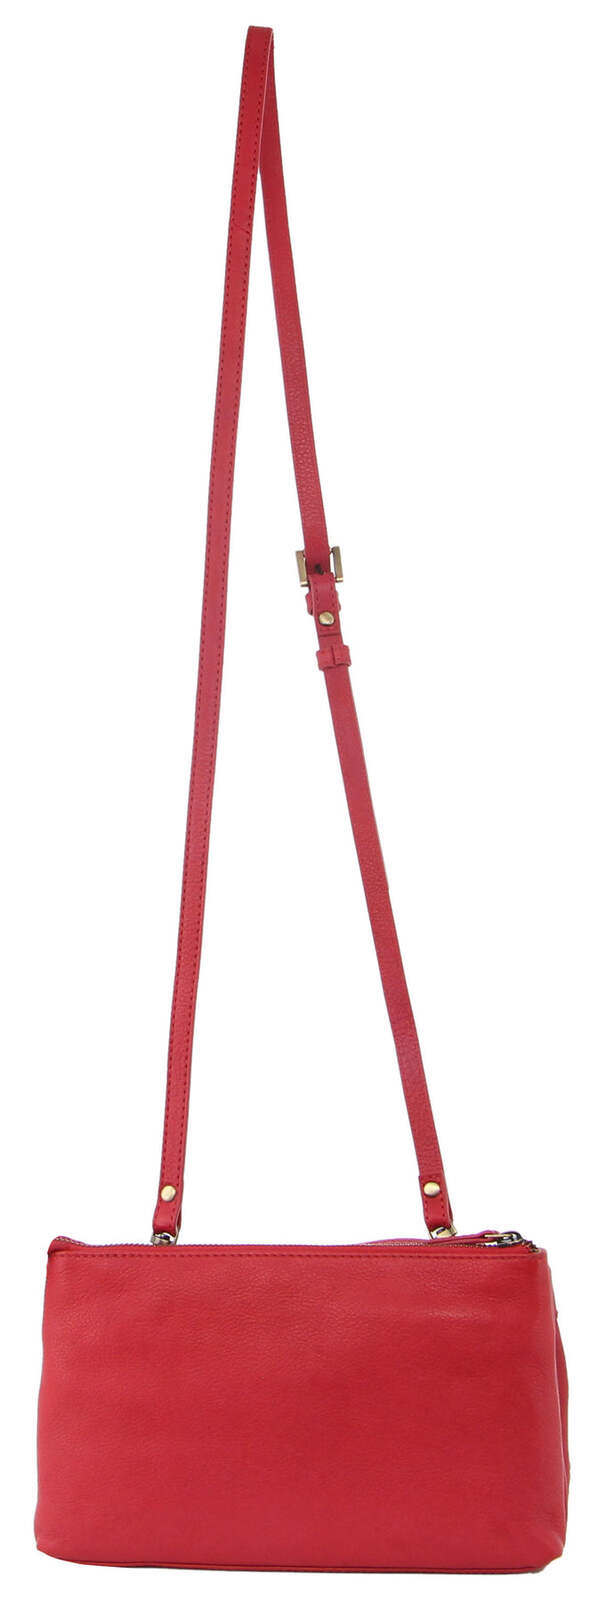 Woven Ladies Crossbody/ Clutch Bag - Red